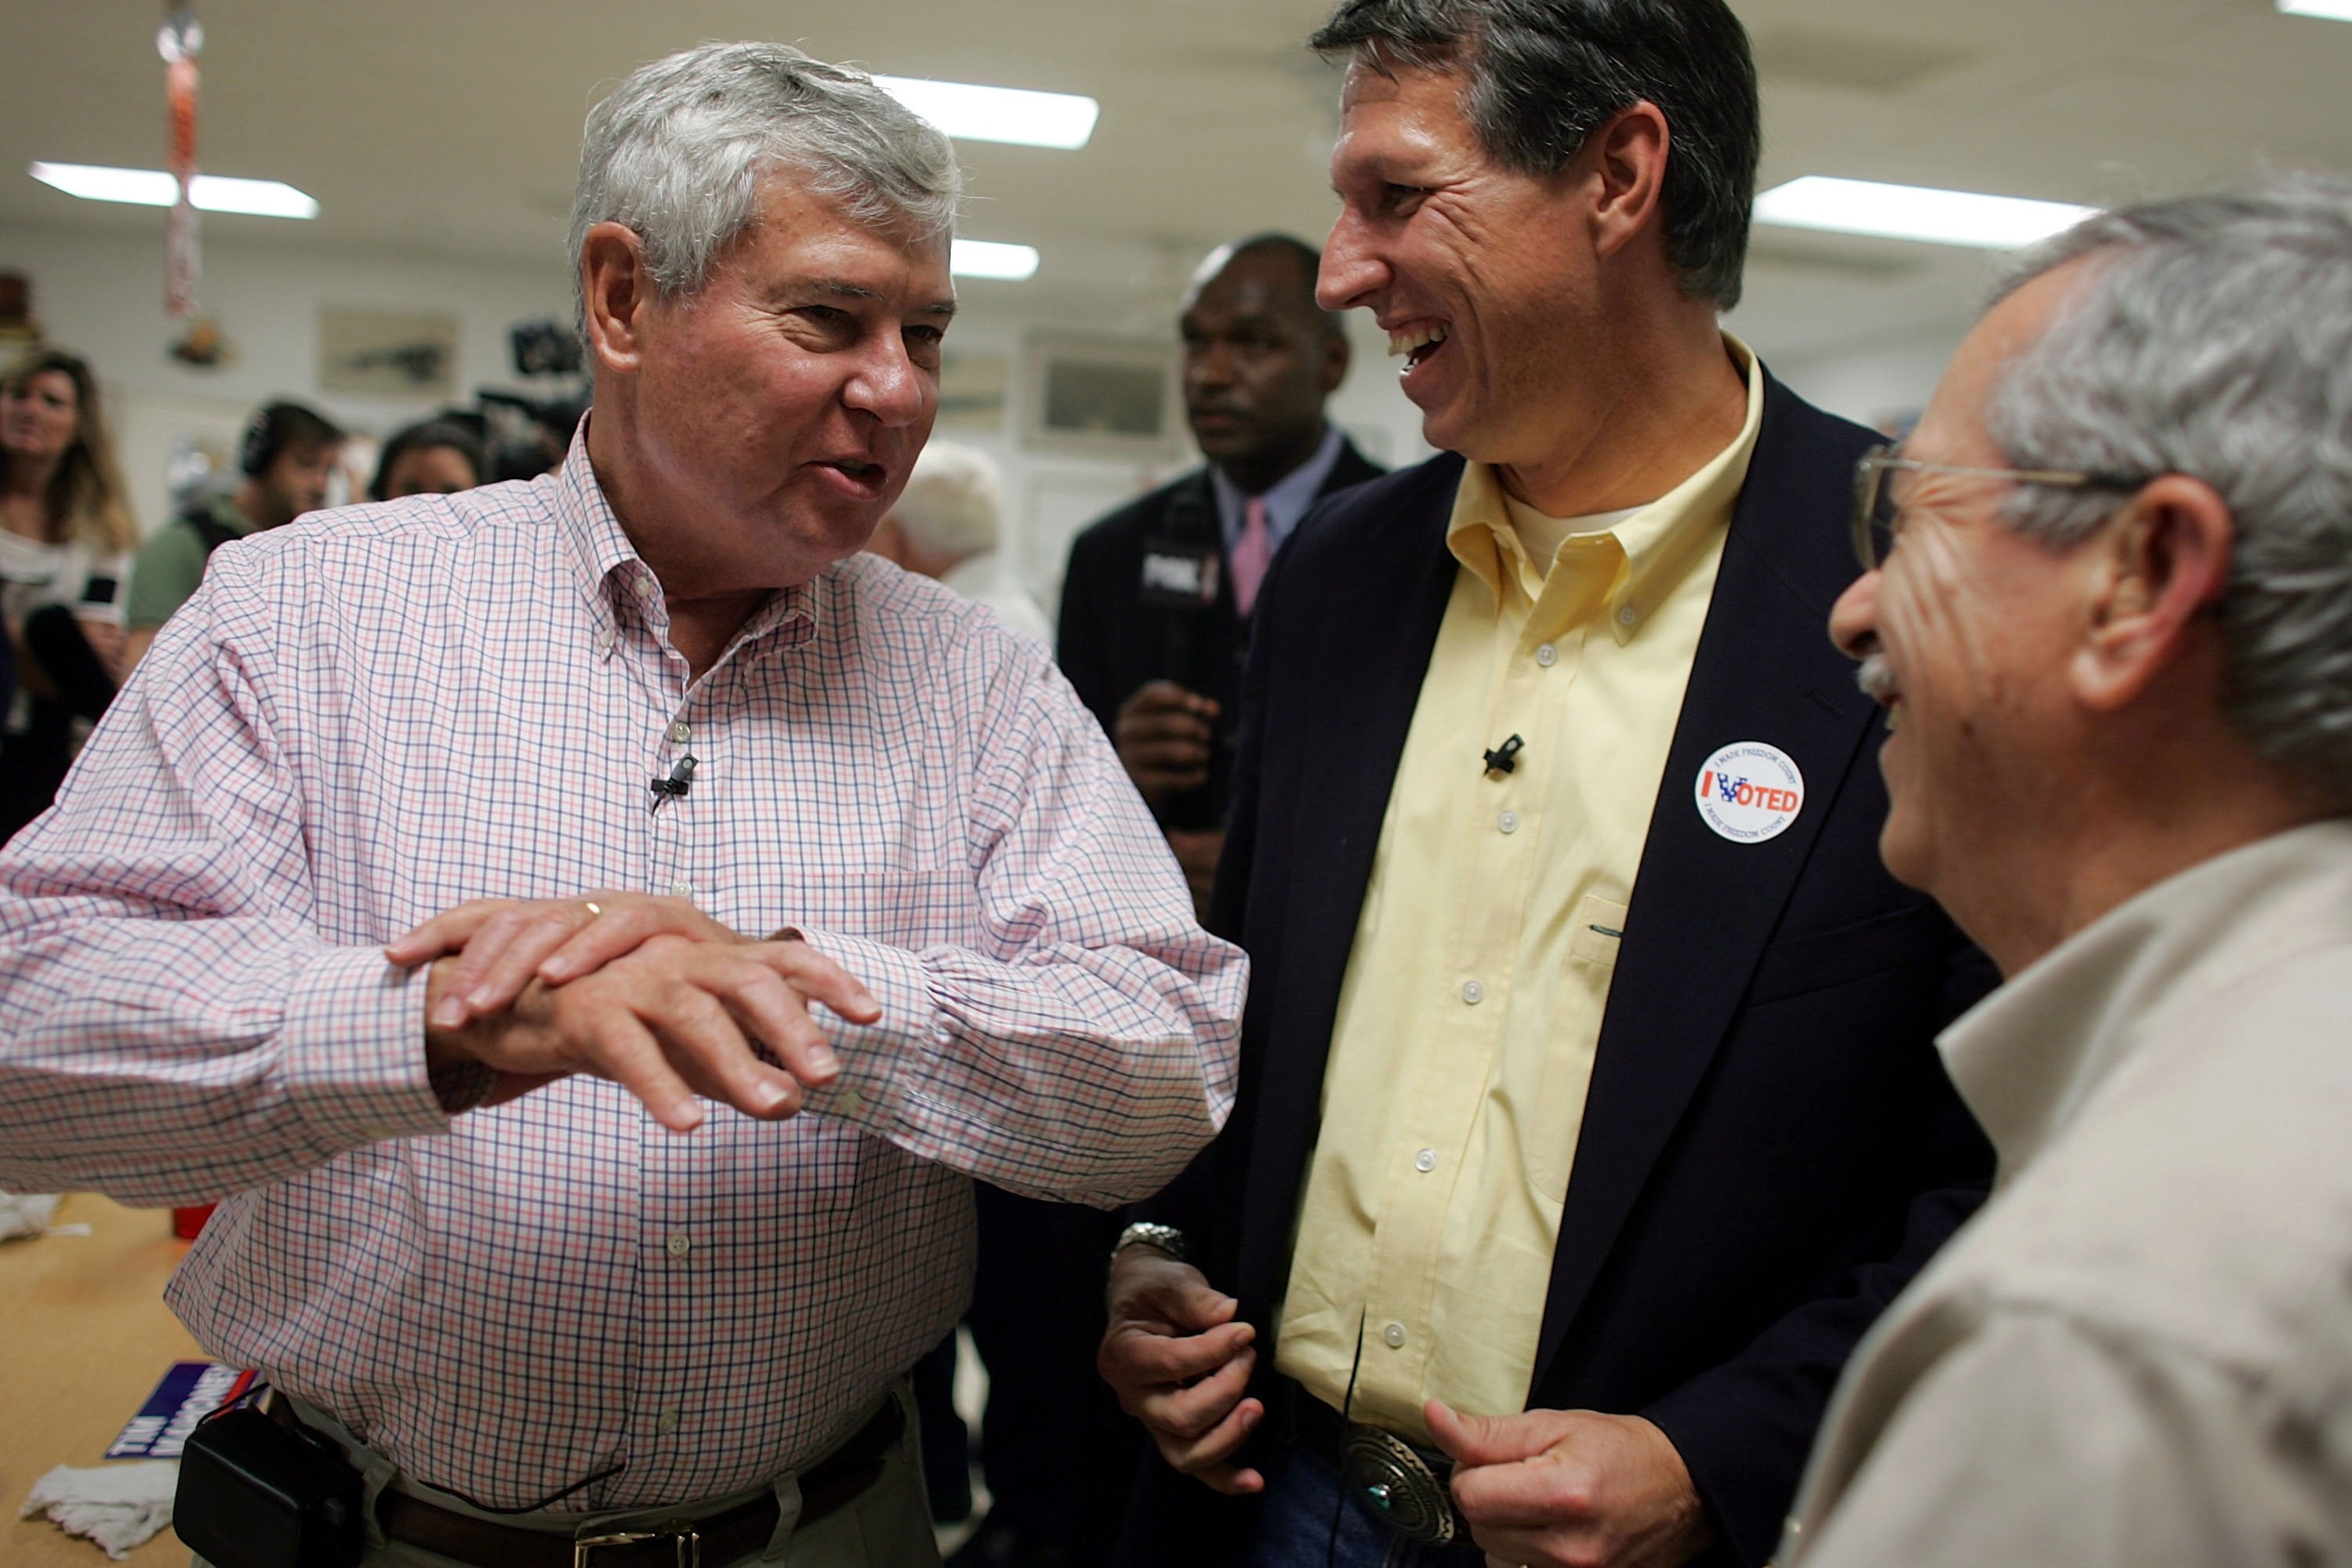 Having left the senate in 2005, Graham campaigned with Florida Democratic Congressional candidate Tim Mahoney at Brenda’s Diner on 3 November 2006 in Punta Gorda, Florida